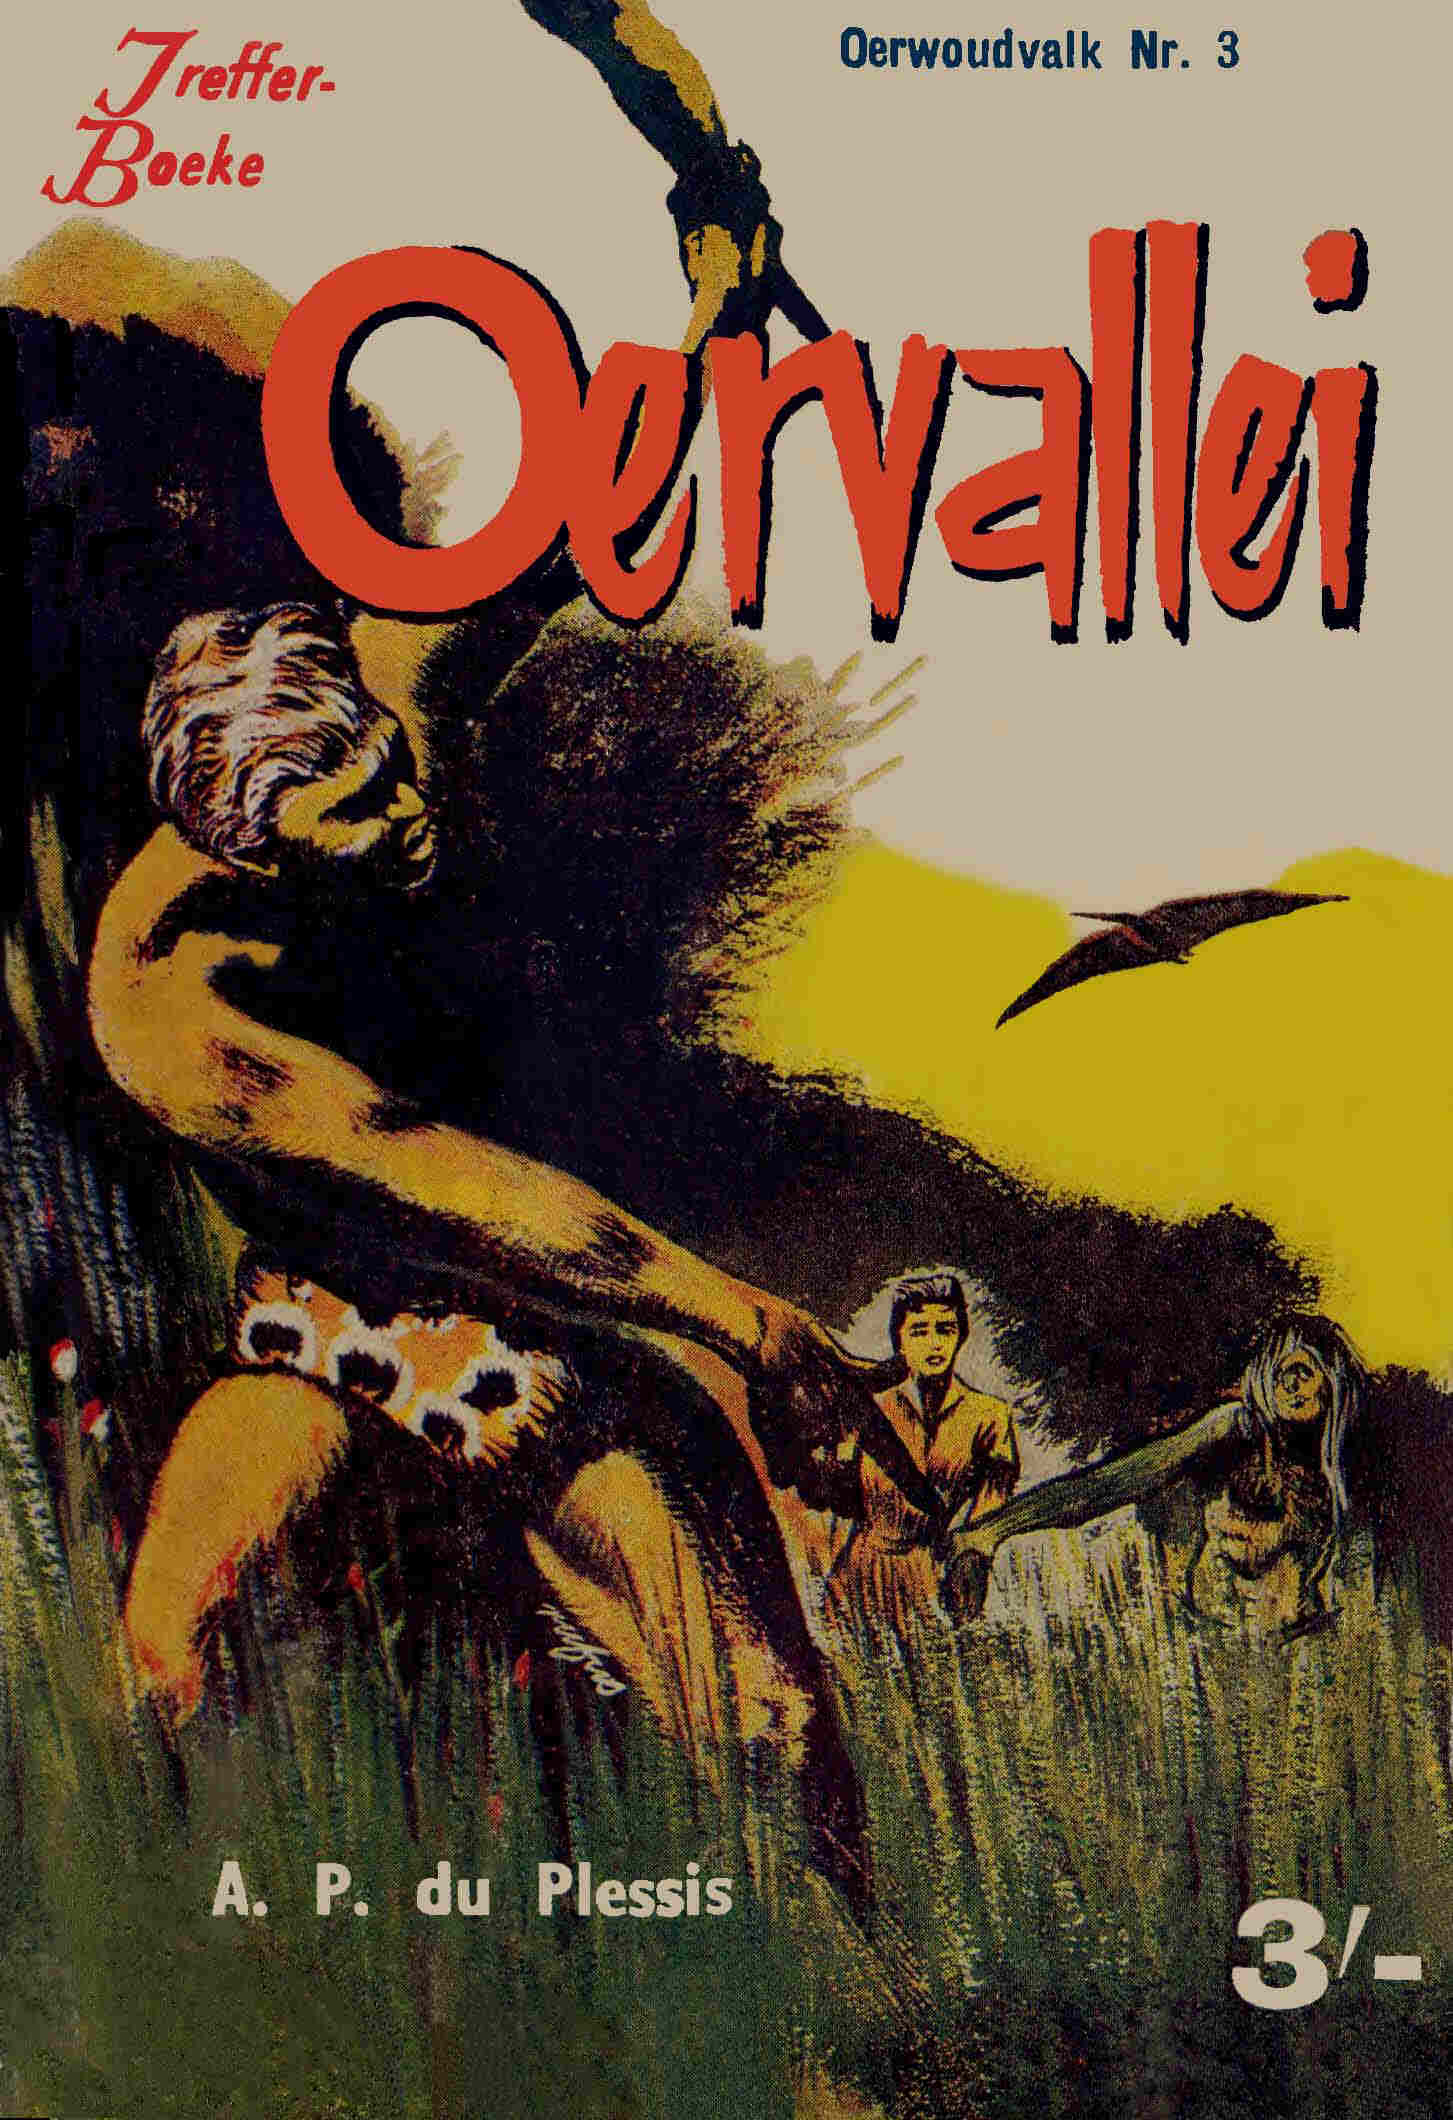 3. Oervallei - A. P. du Plessis (1959)